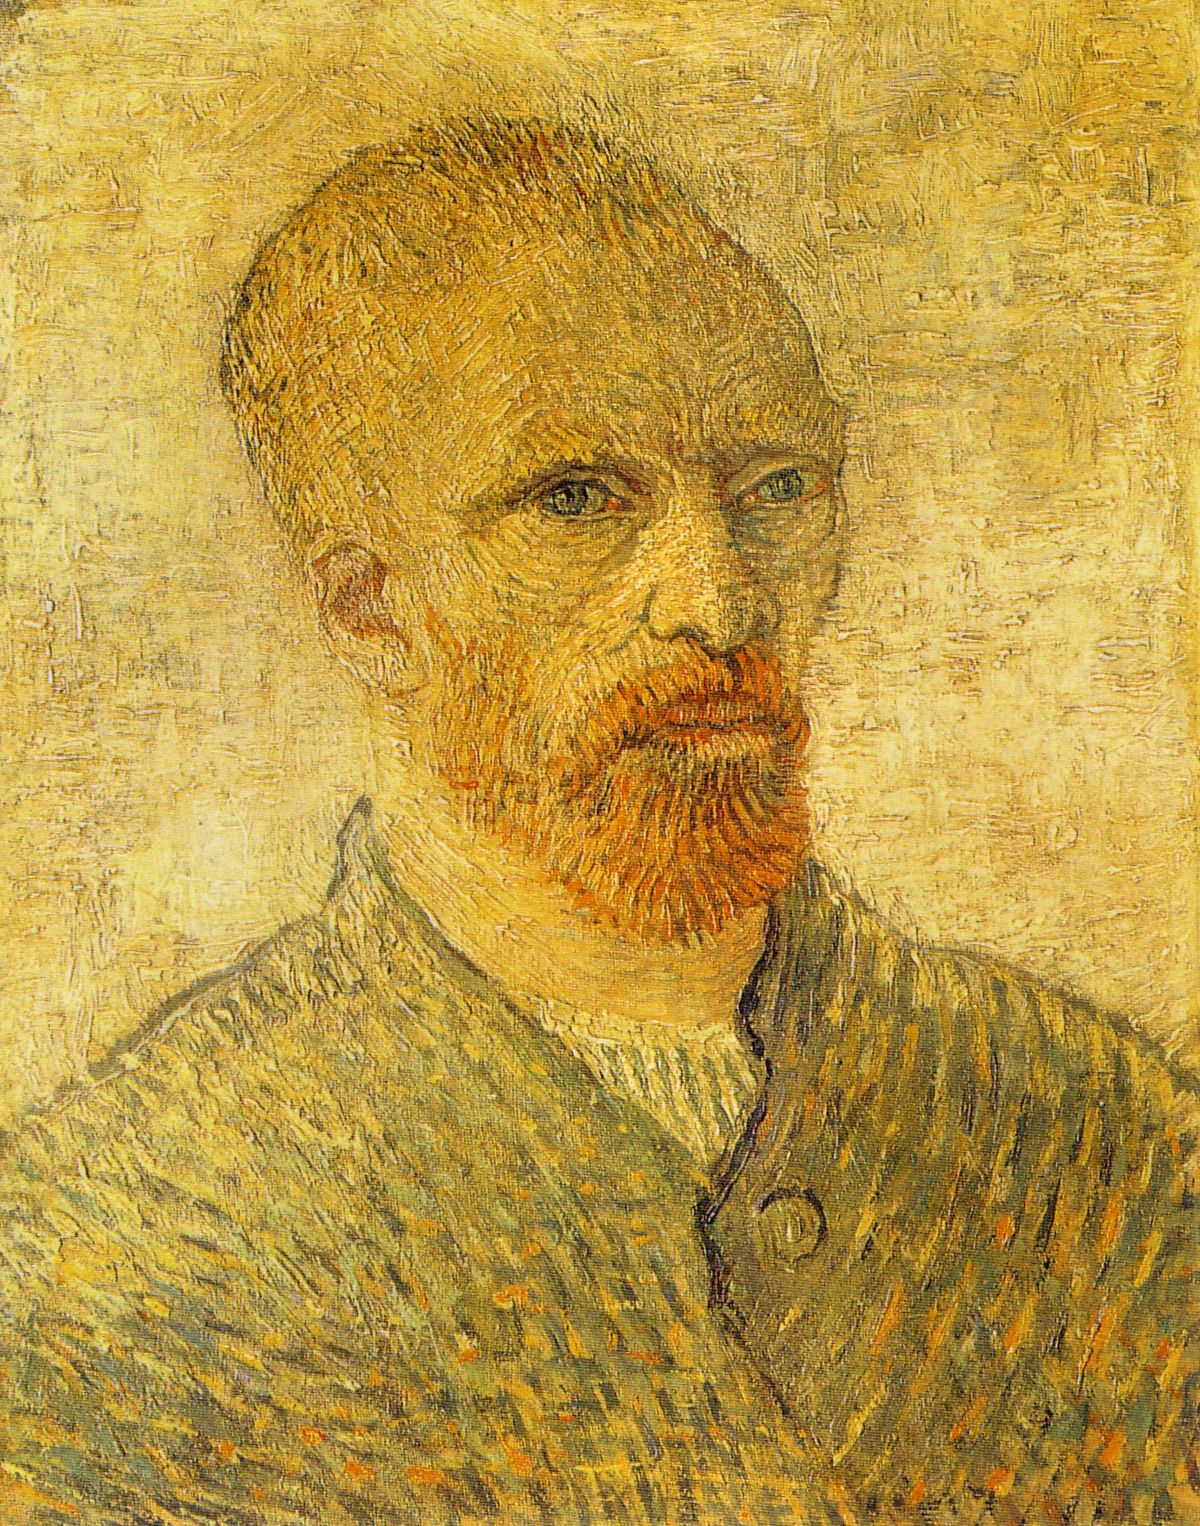 Fake Van Gogh “Self-portrait” (probably 1920s)

Photograph courtesy of Stefan Koldehoff, Cologne

